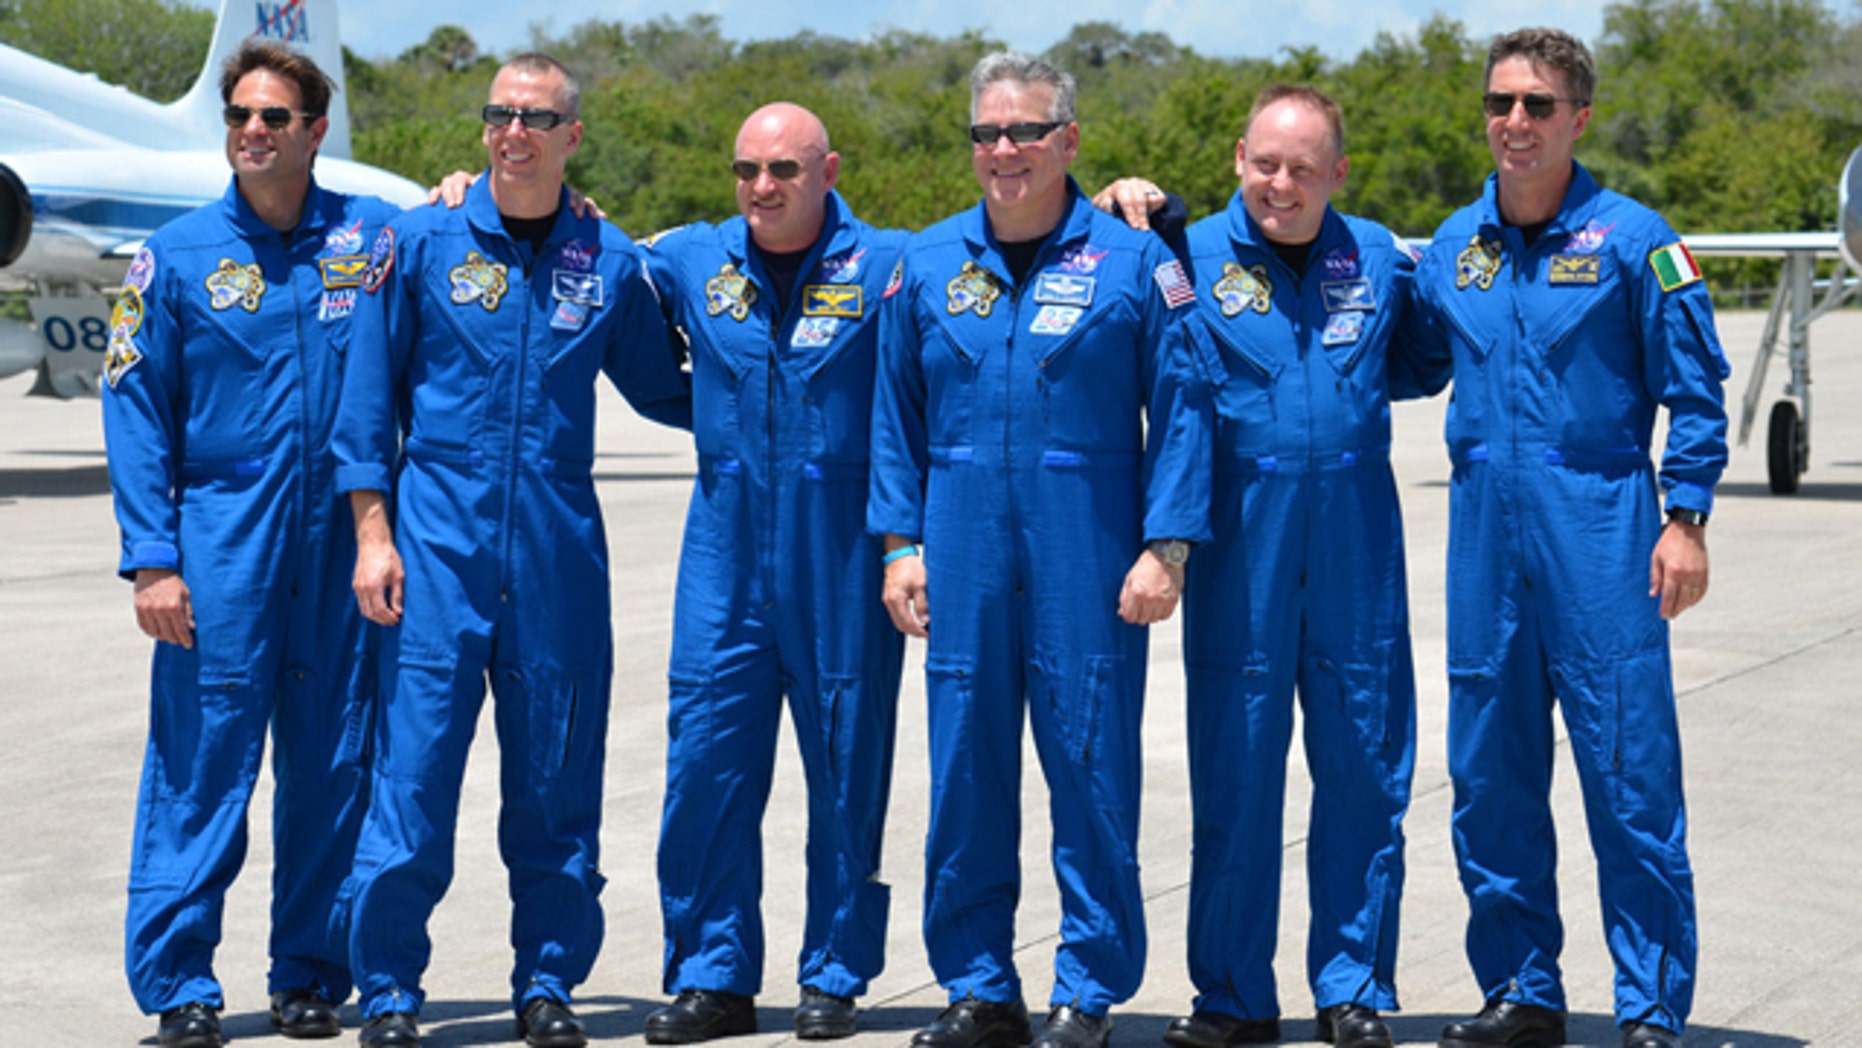 1992 space shuttle endeavor crew